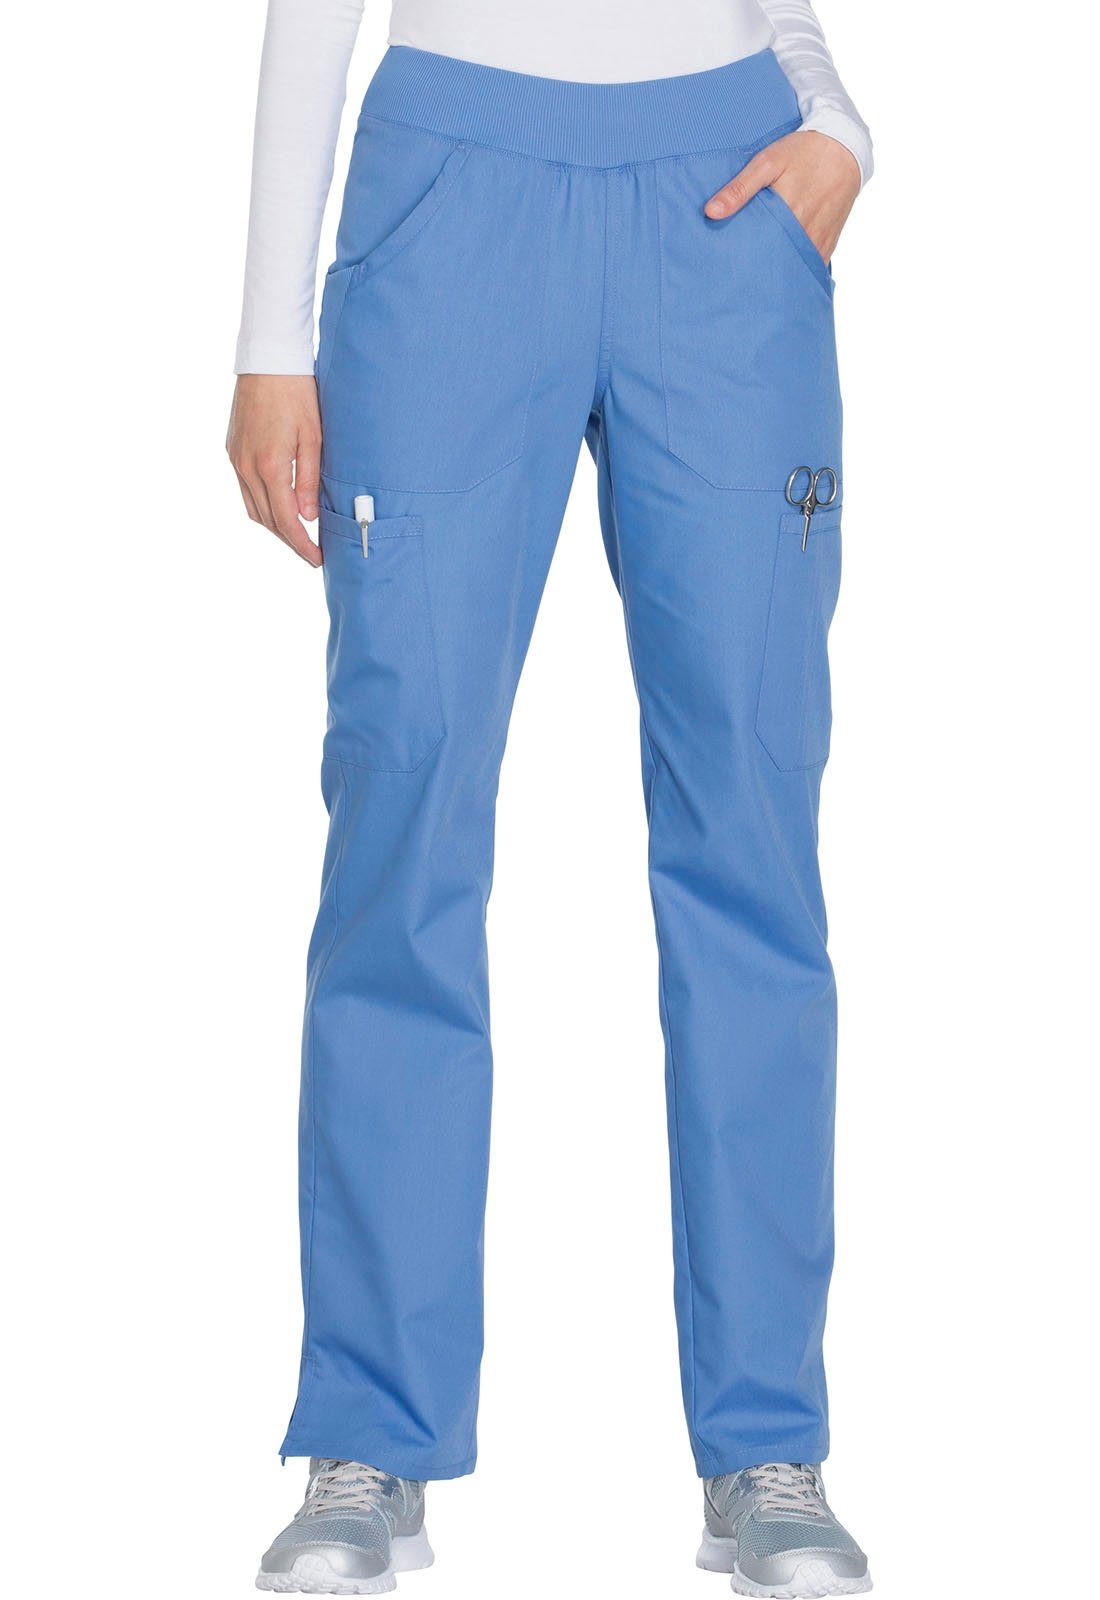 Teal Cherokee Scrubs Workwear Core Mid Rise Drawstring Cargo Pants 4044  TLBW | eBay